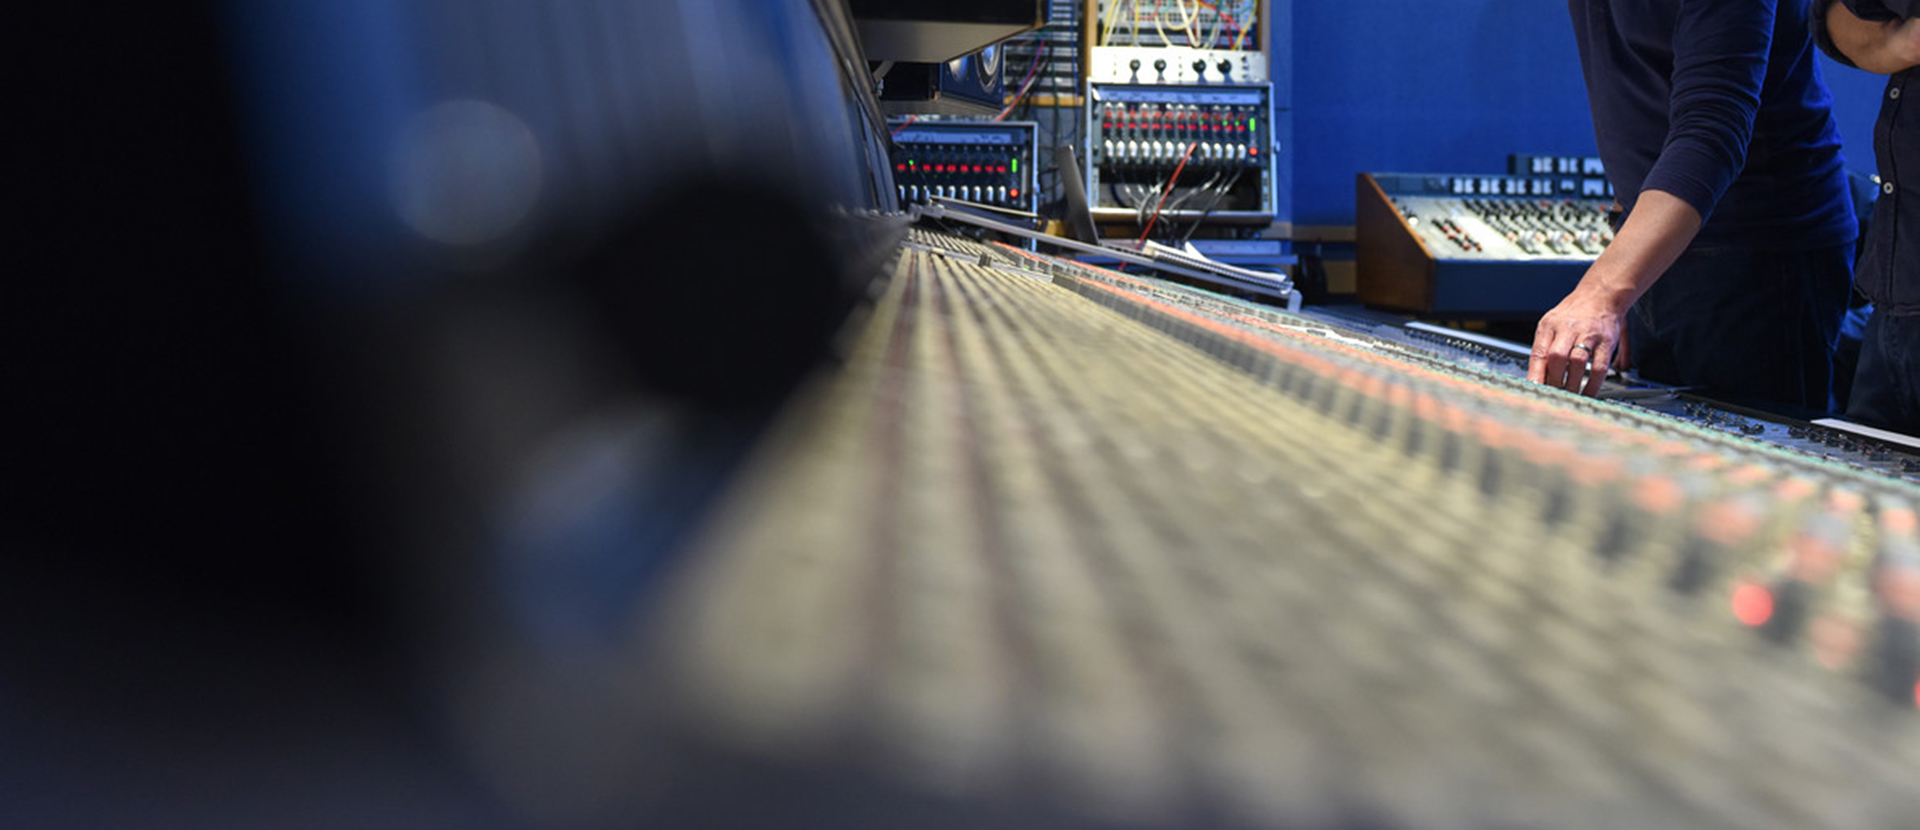 A mixing desk in a recording studio